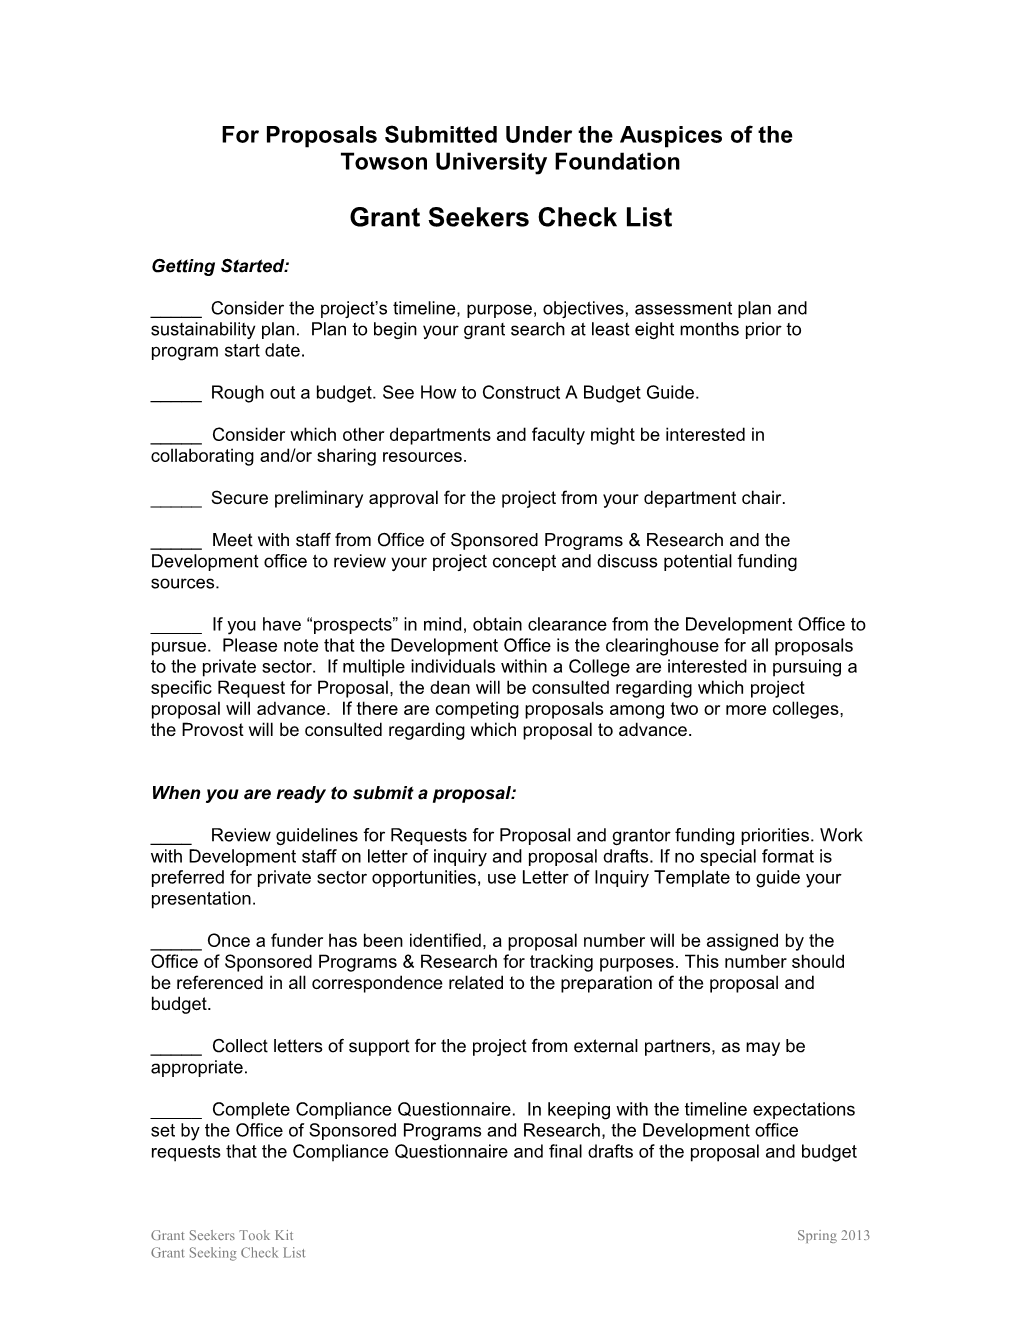 Grant Seeking Check List